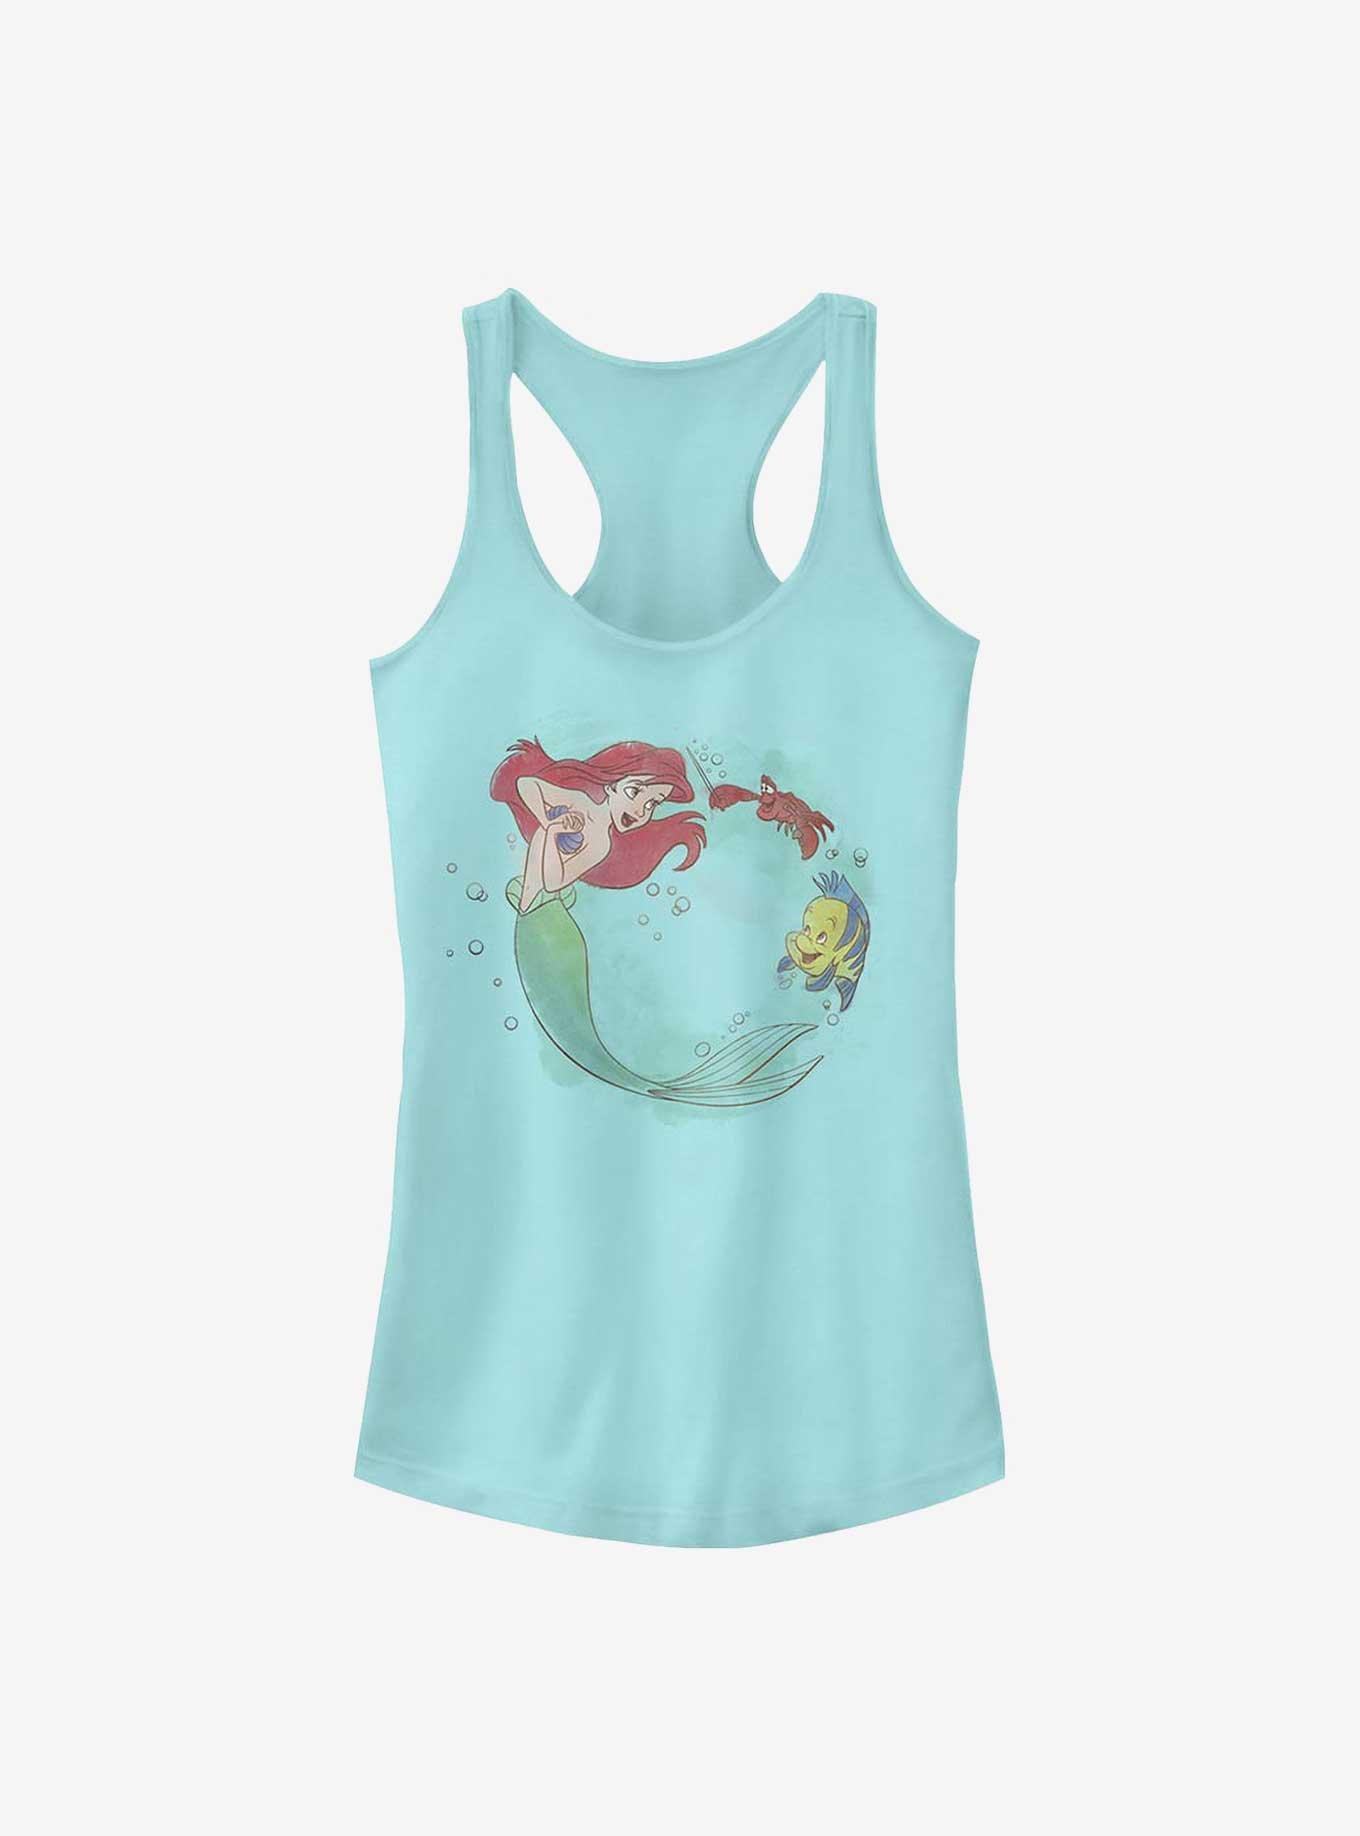 Disney The Little Mermaid Ariel, Flounder, and Sebastian Girls Tank, CANCUN, hi-res